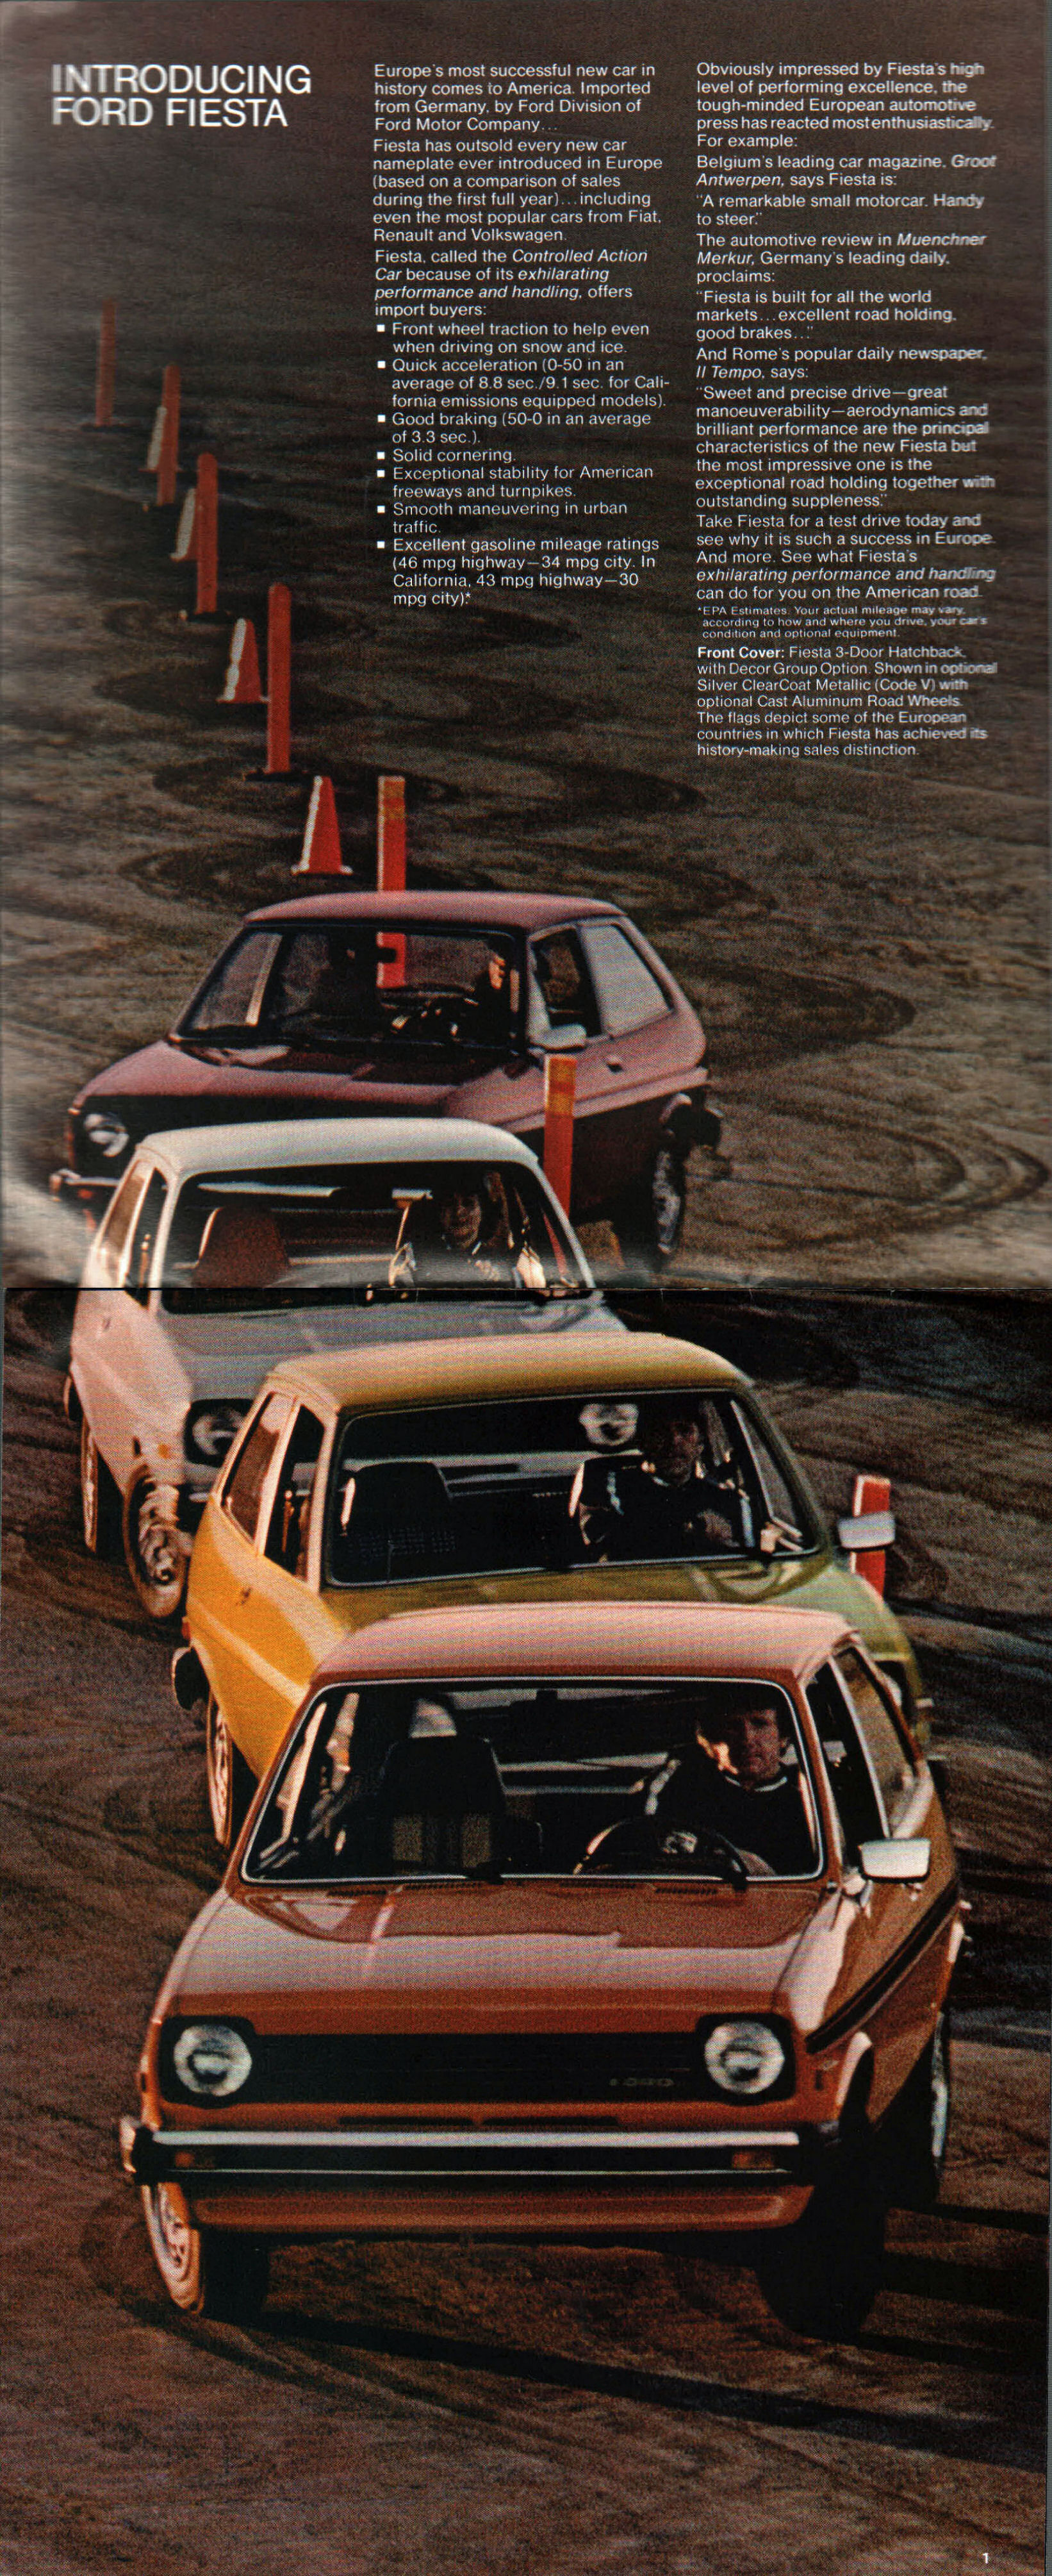 1978_Ford_Fiesta-01